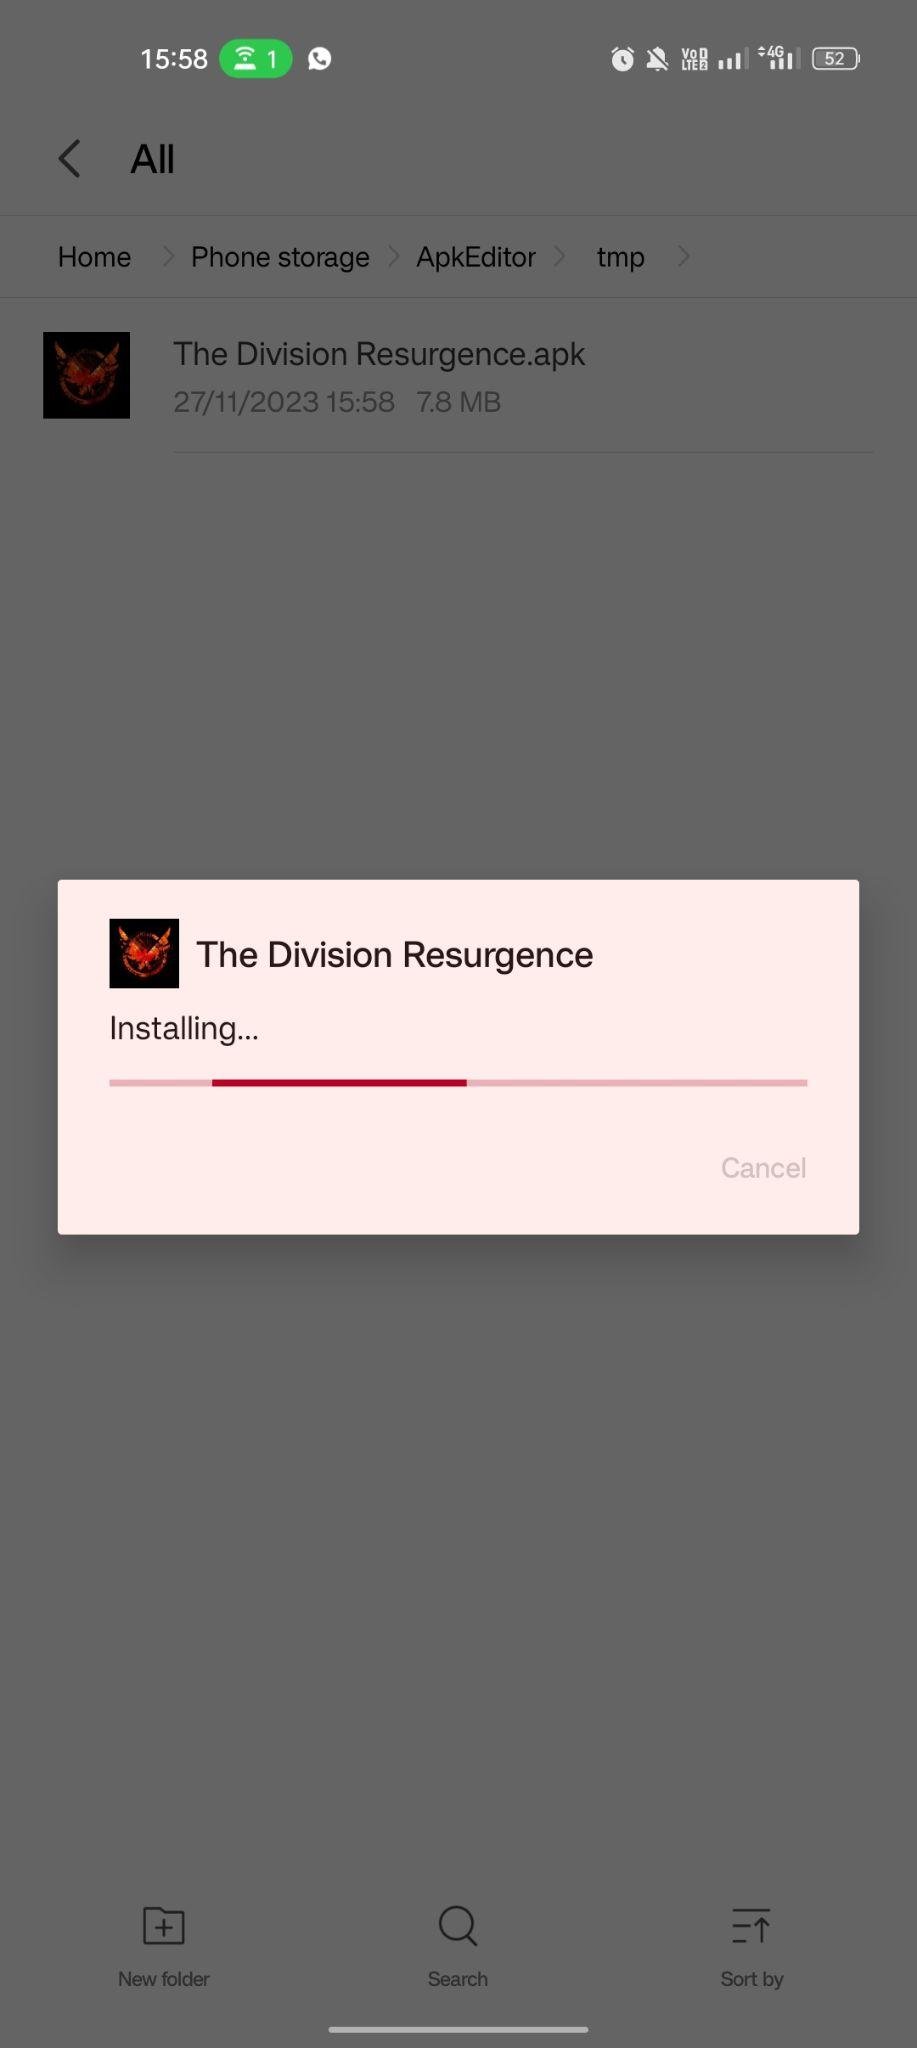 The Division Resurgence apk installing